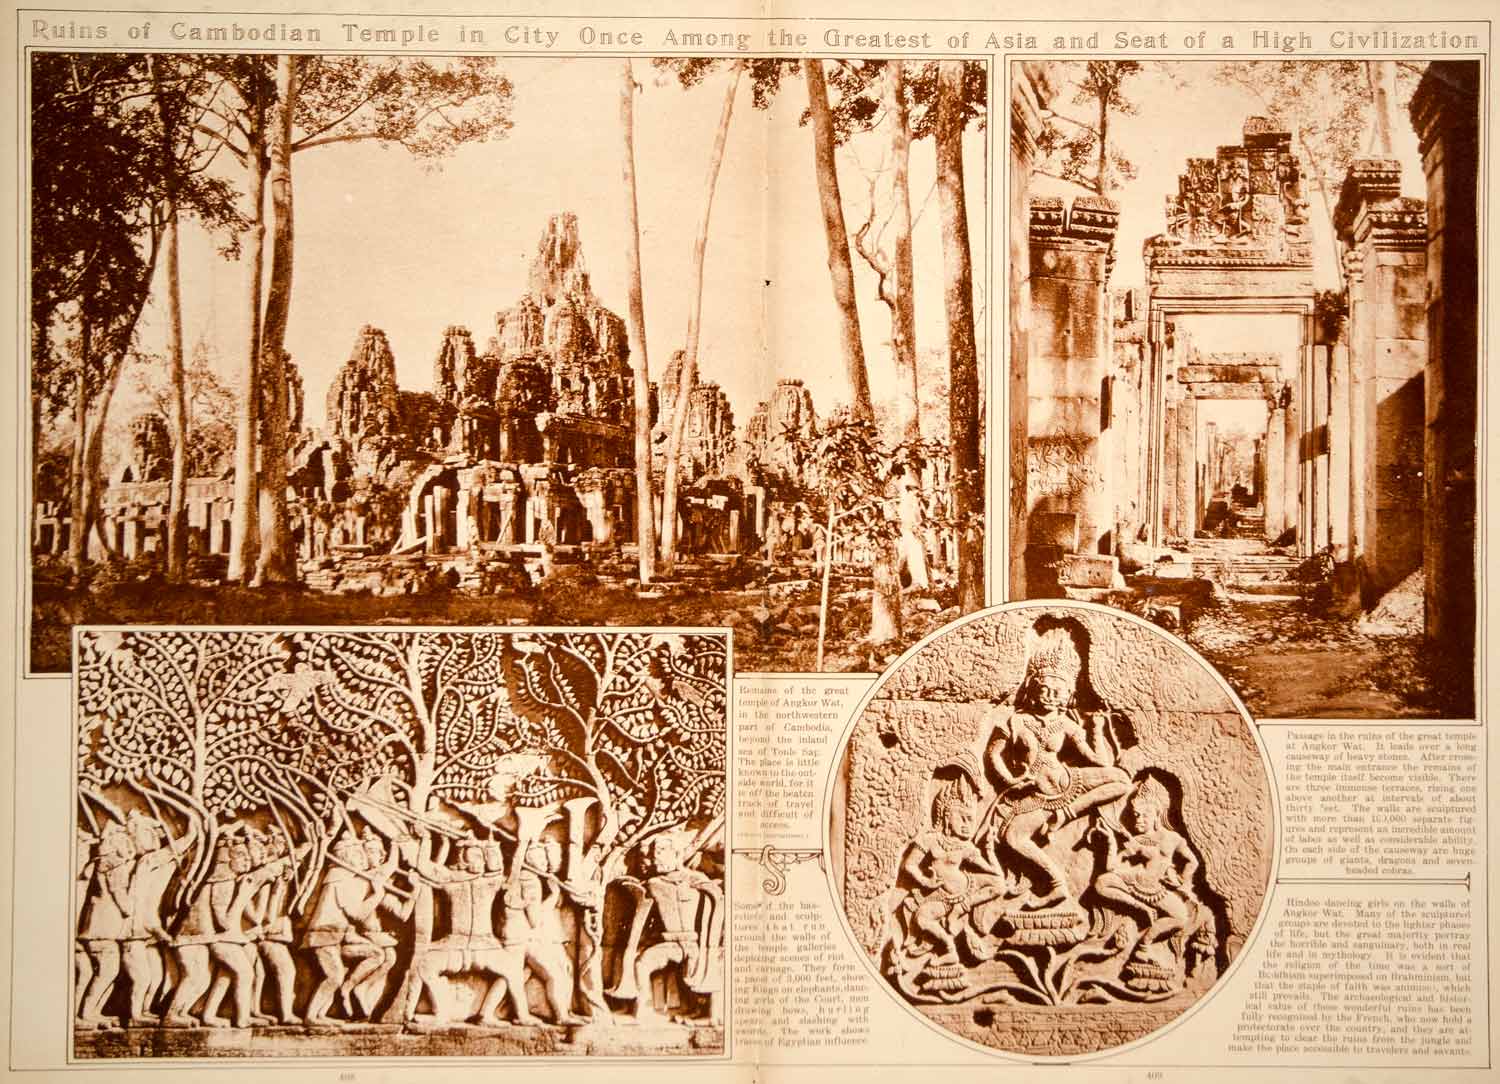 1923 Rotogravure Angkor Wat Cambodia Temple Ruins Archeological Site Historic